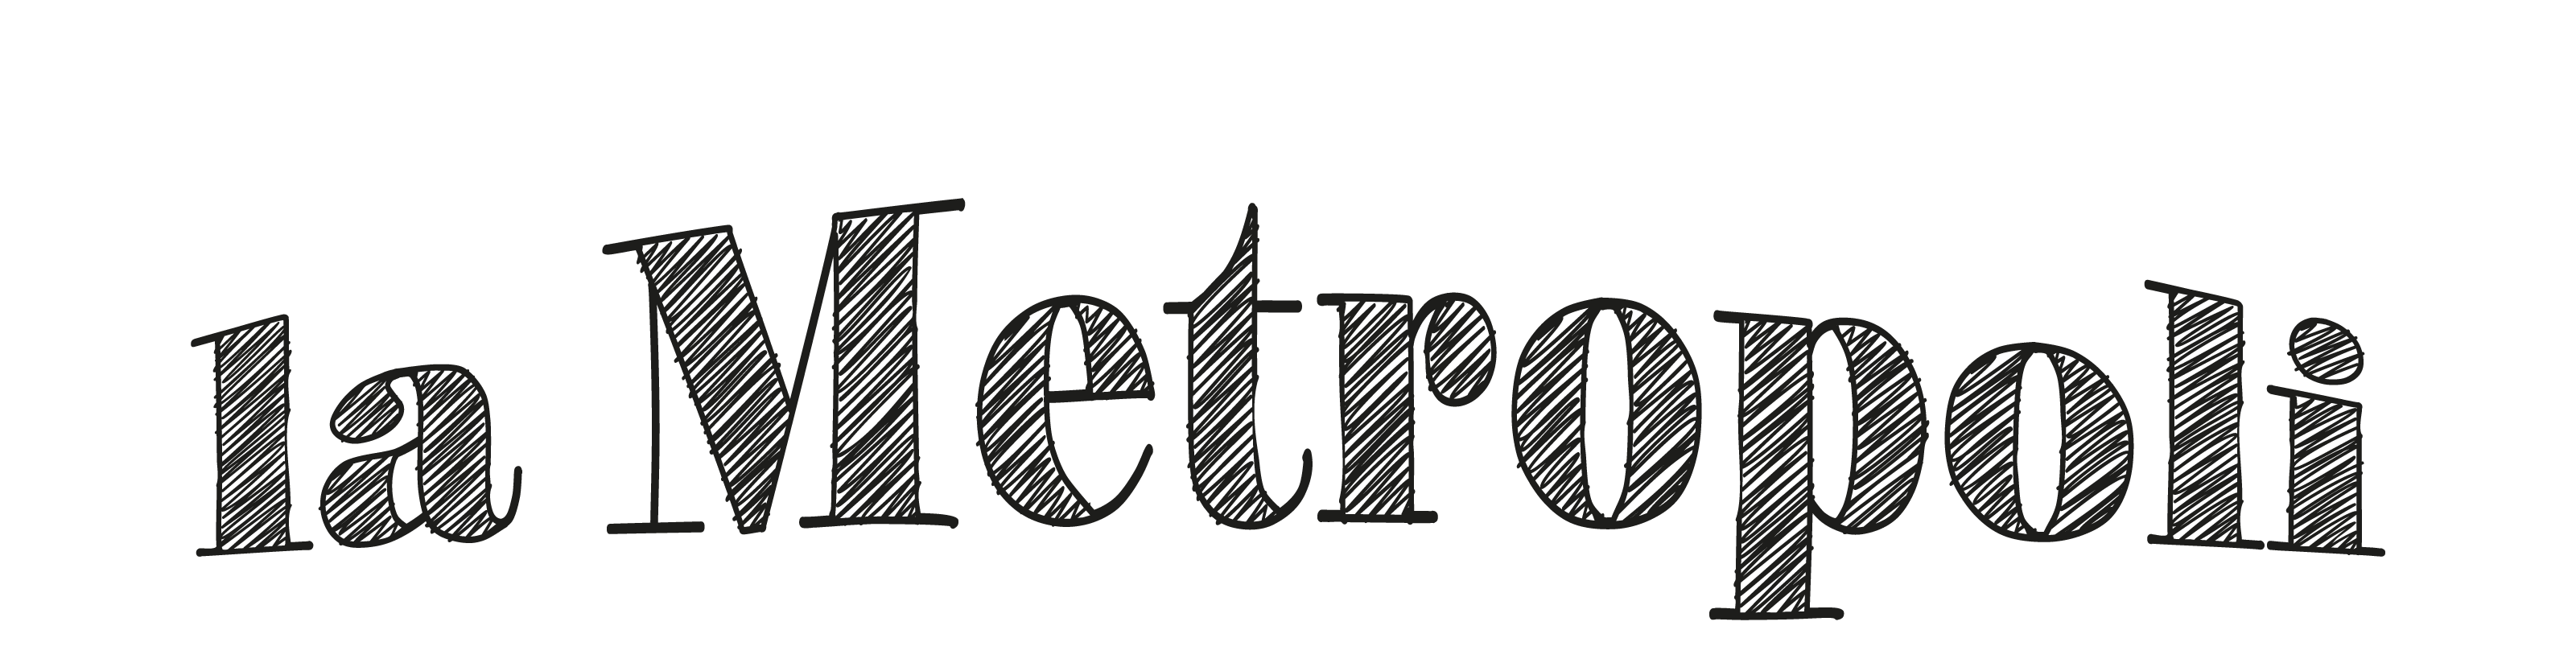 Metropoli logo